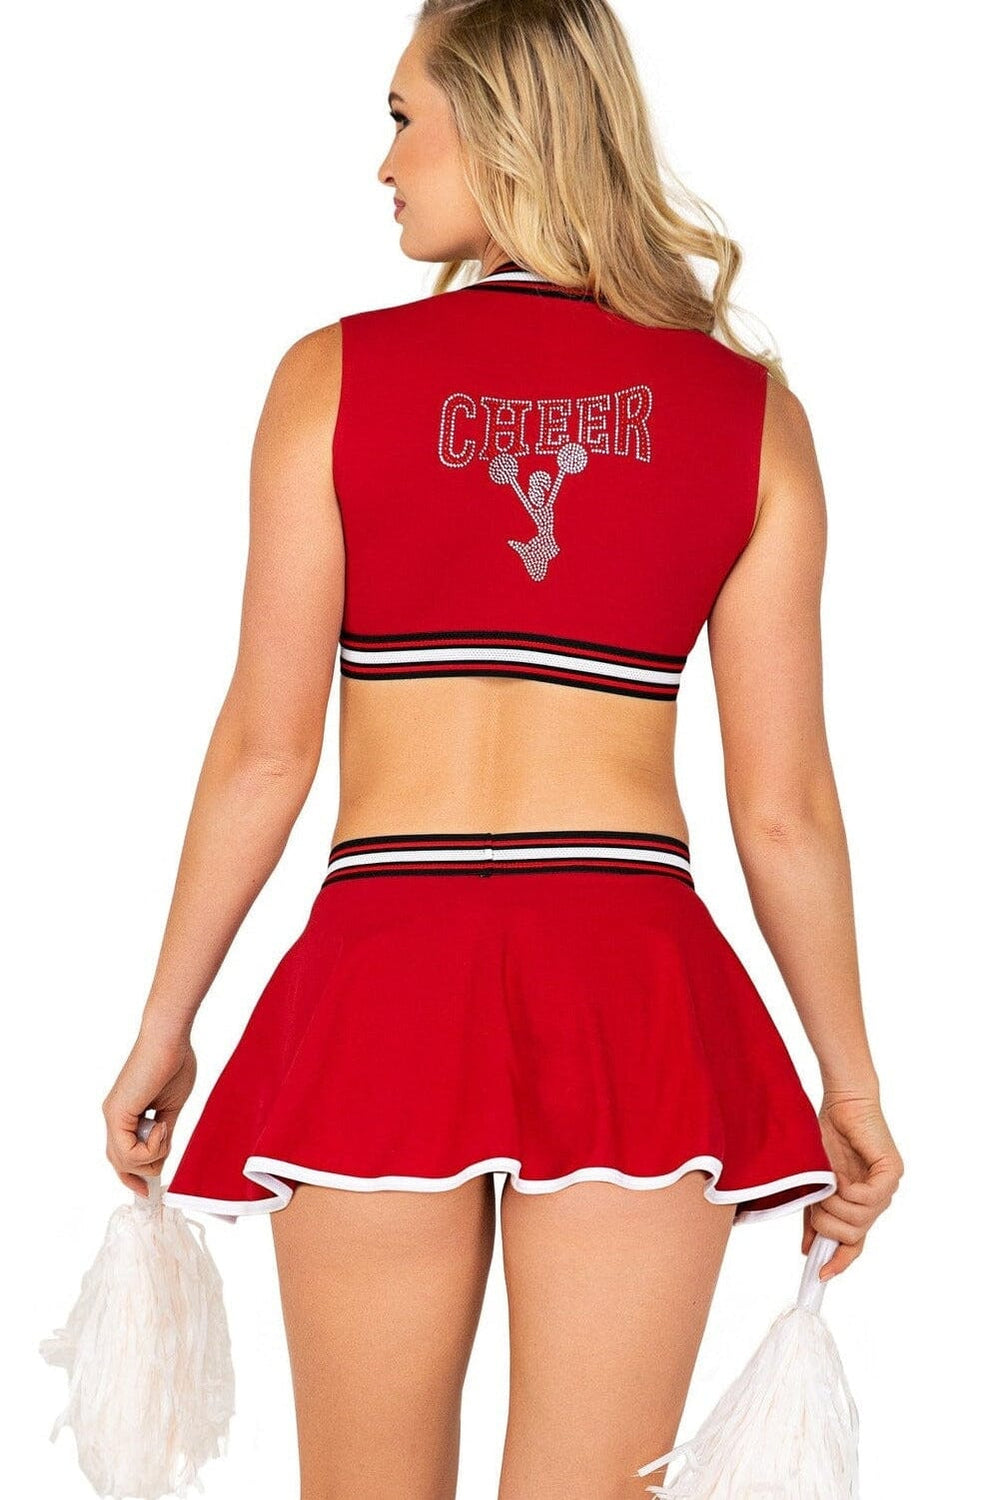 3pc School Spirit-Cheerleader Costumes-Roma Costumes-SEXYSHOES.COM